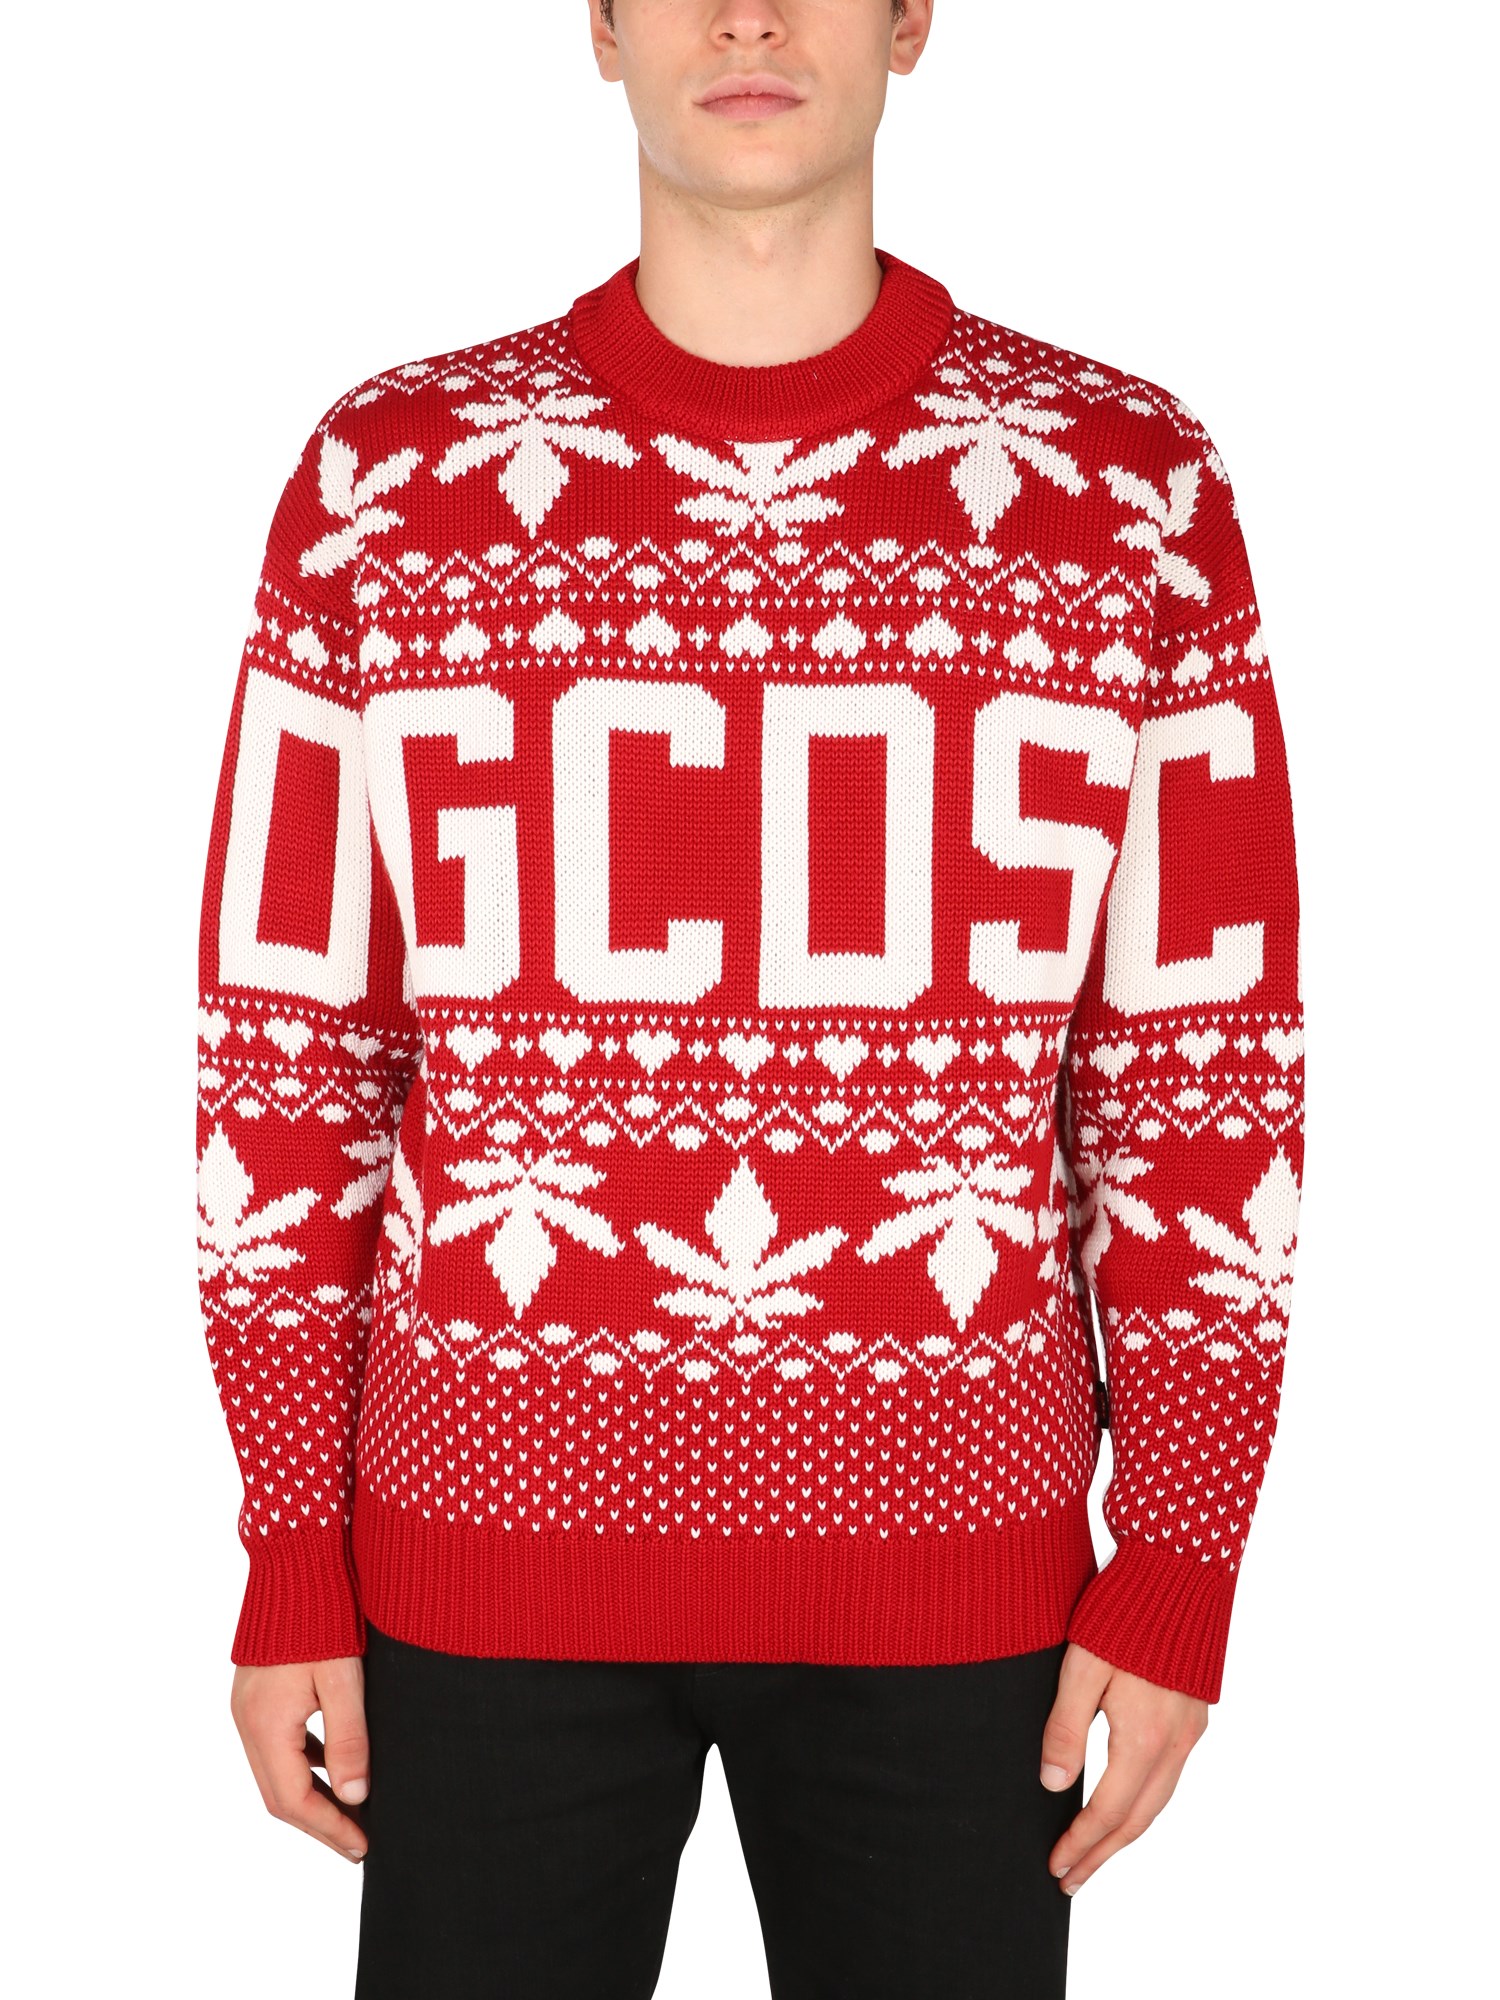 gcds christmas sweater with logo